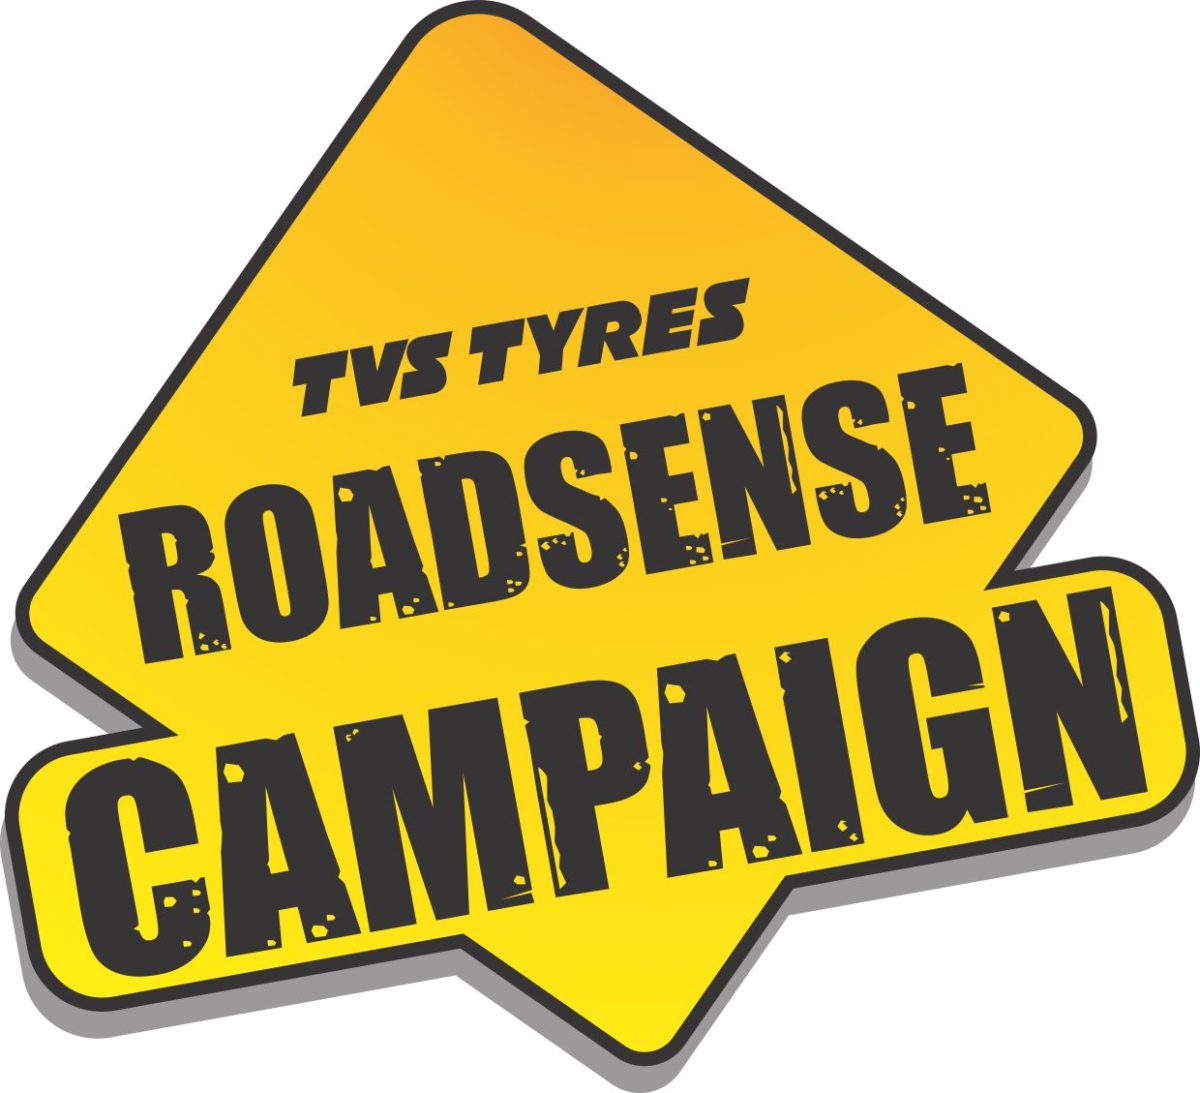 TVS Tyres Roadsense